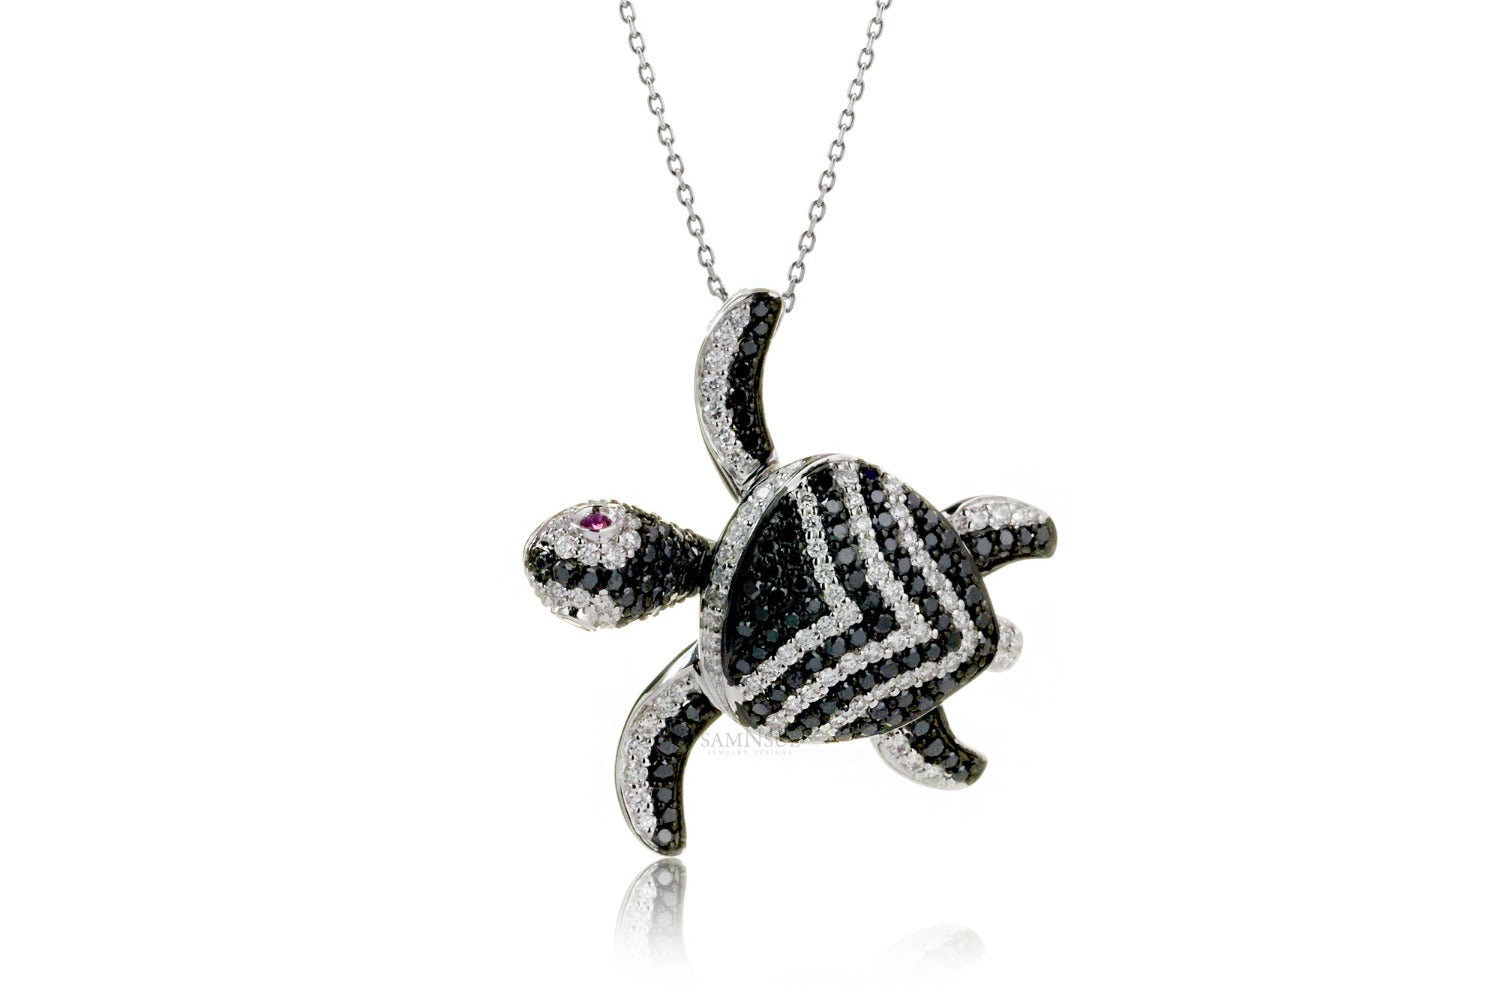 Turtle diamond pendant necklace Chevron top flipper style in black diamond